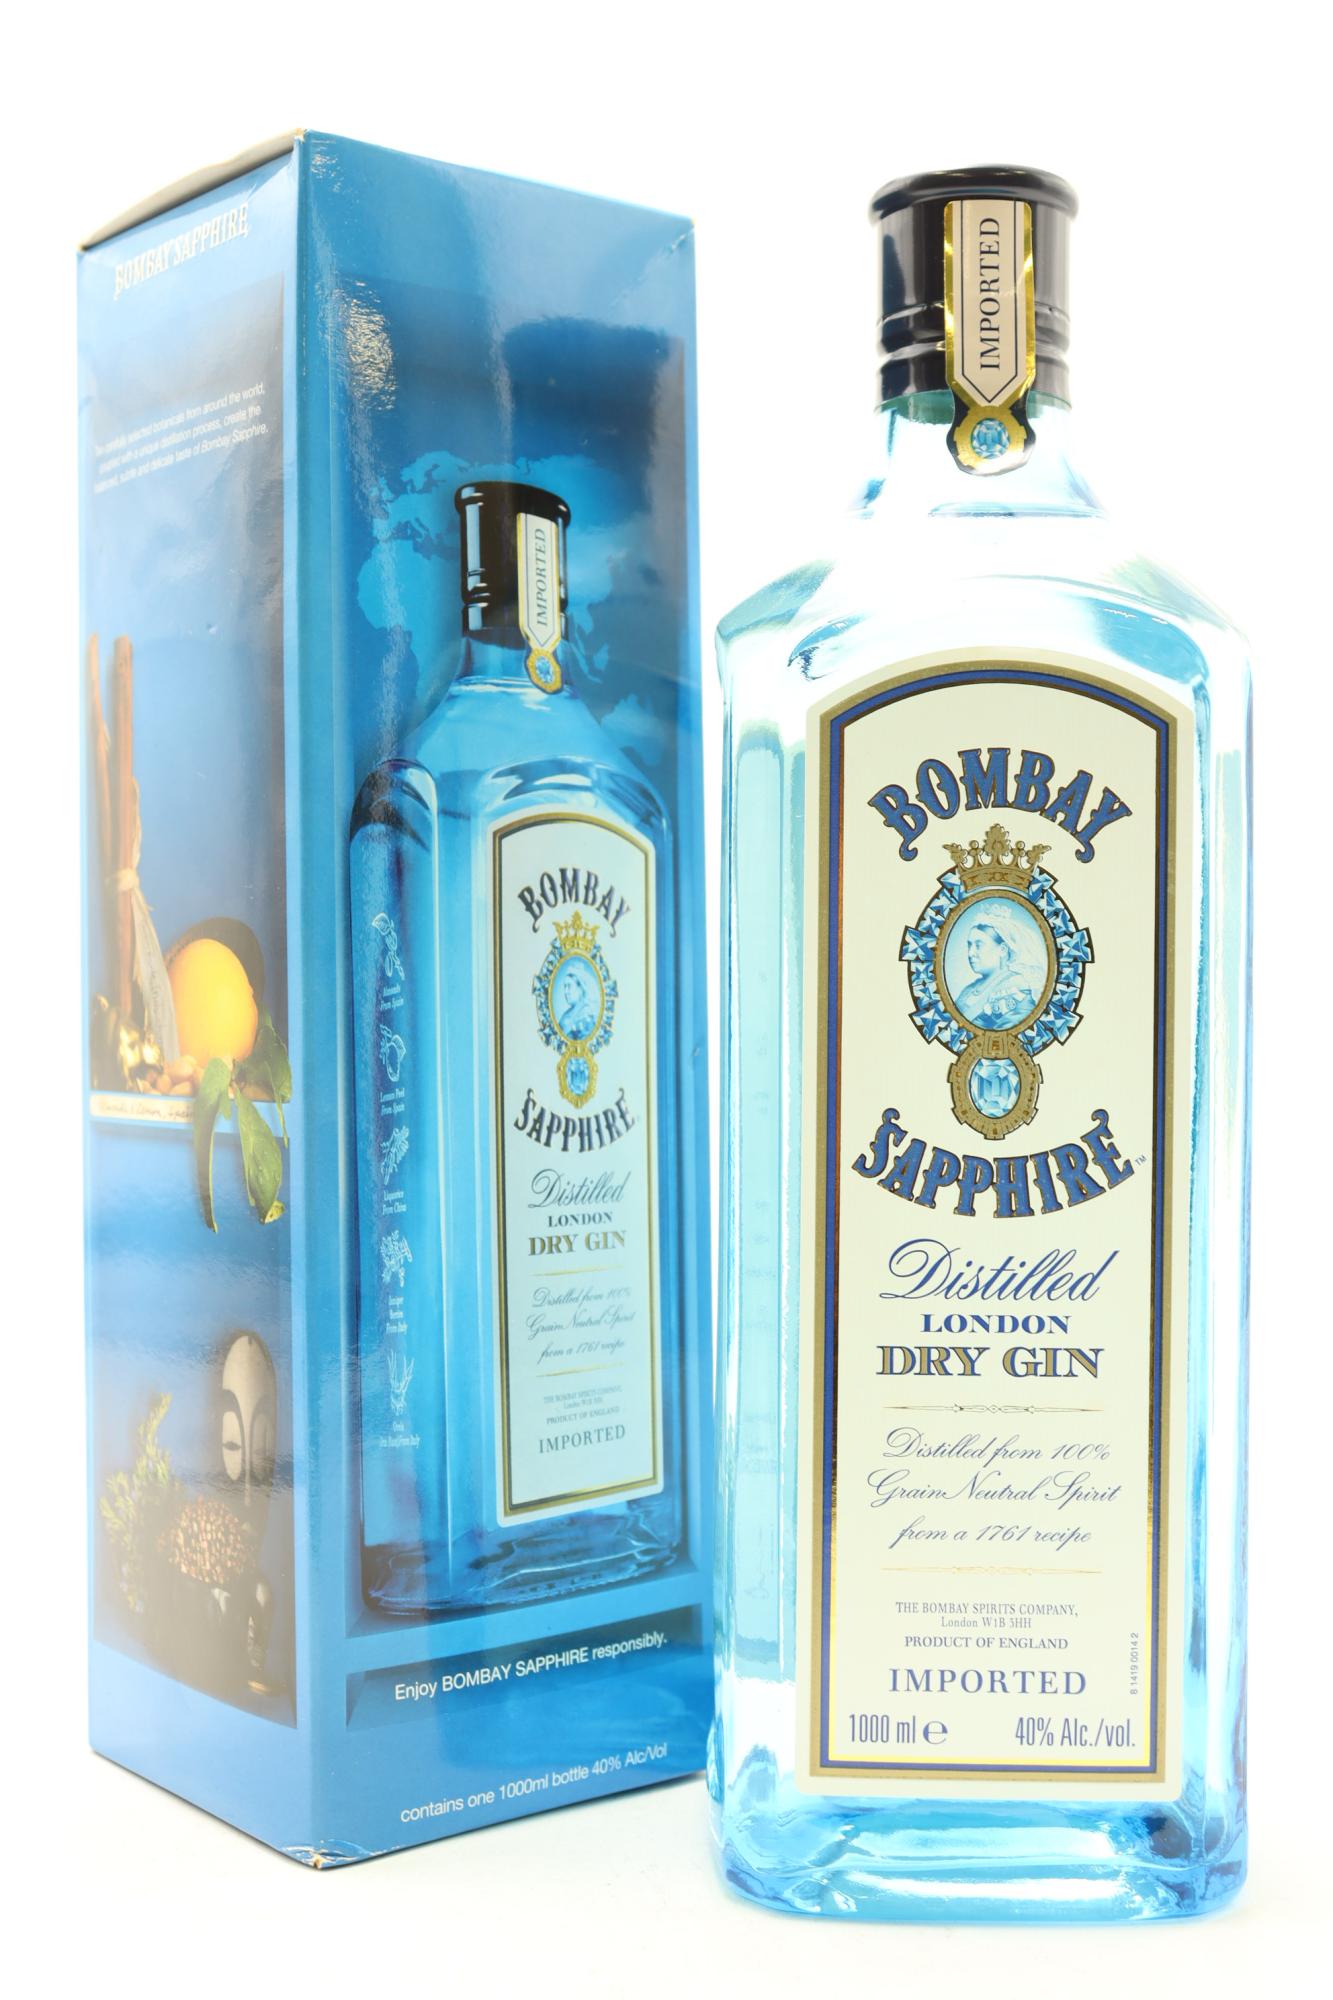 1) Bombay Sapphire London Dry Gin, England, 40% ABV, 1000ml (GB)